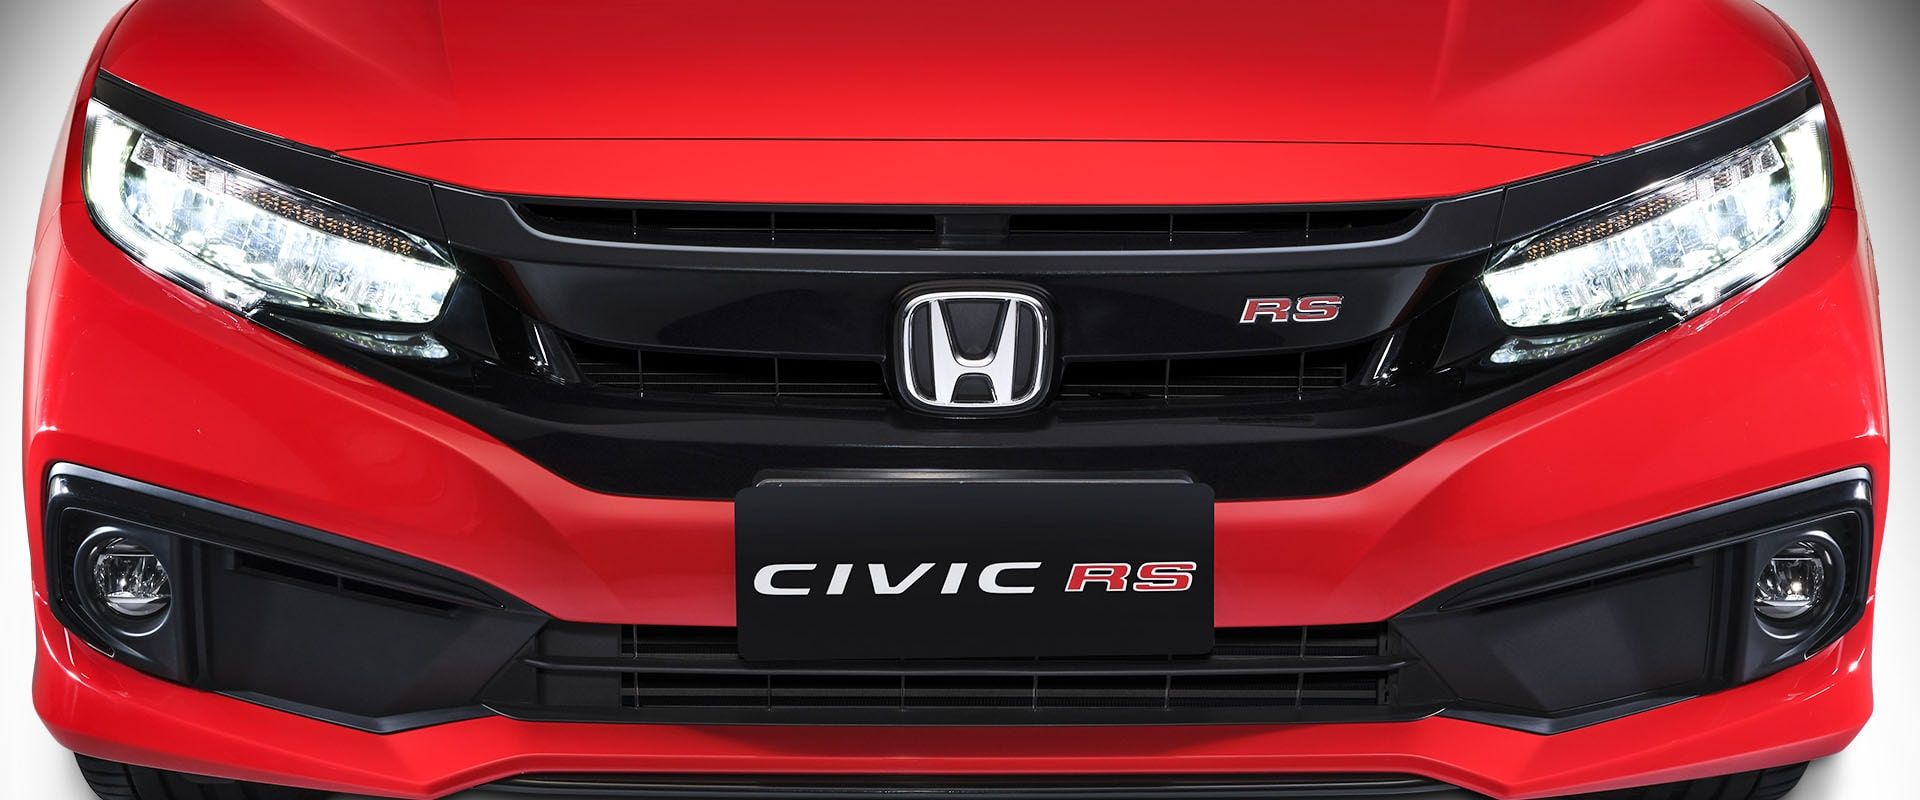 Honda Civic 19 Price Philippines Absolute Comfort In Compact Sedan